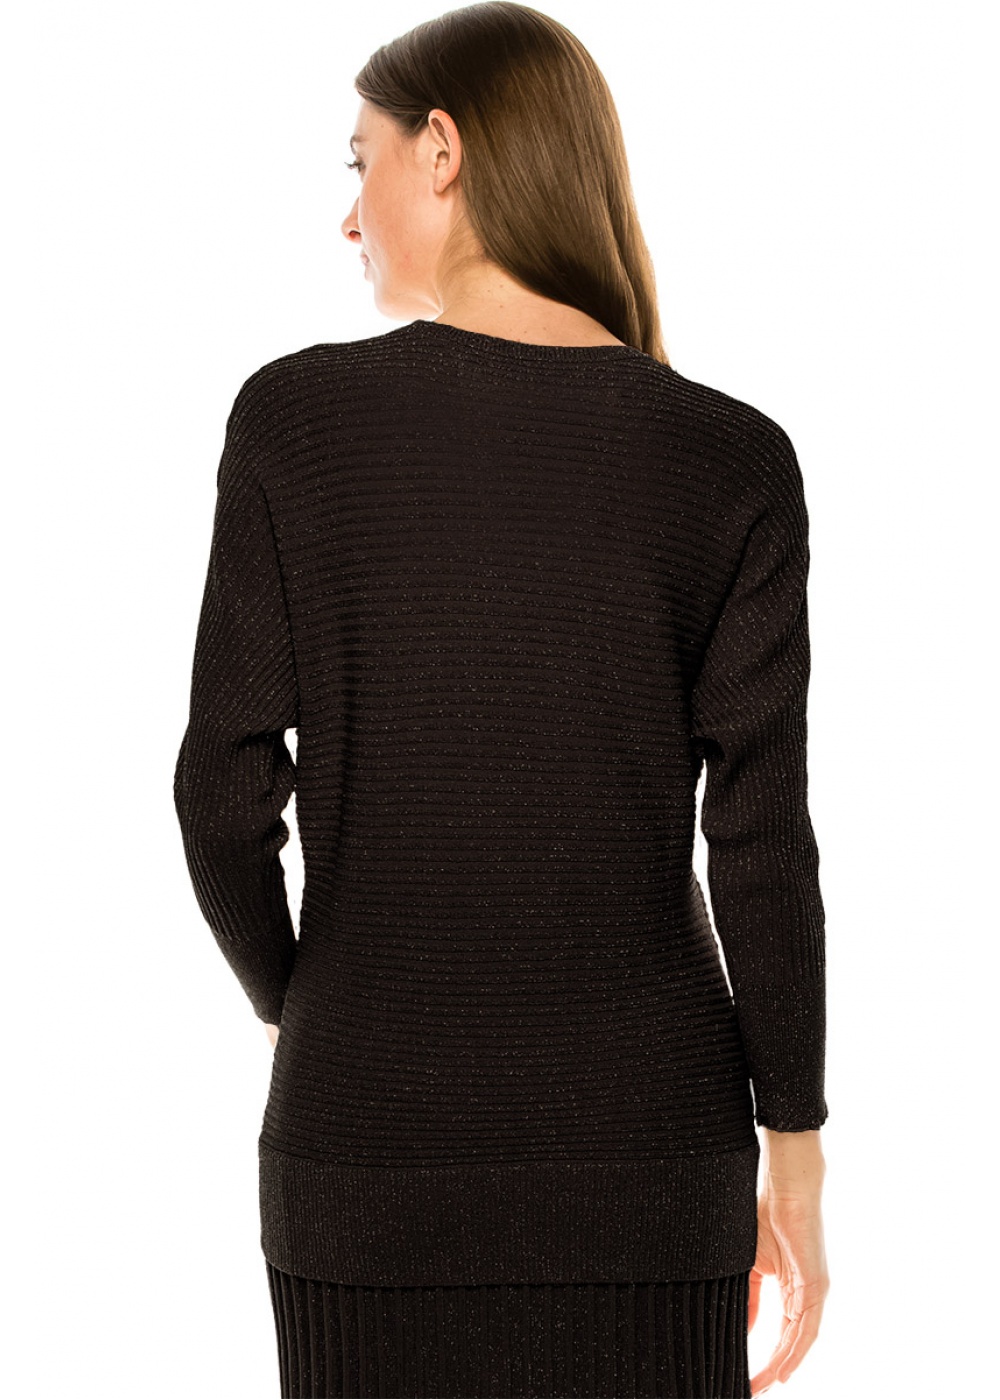 Sweater KA147 Black